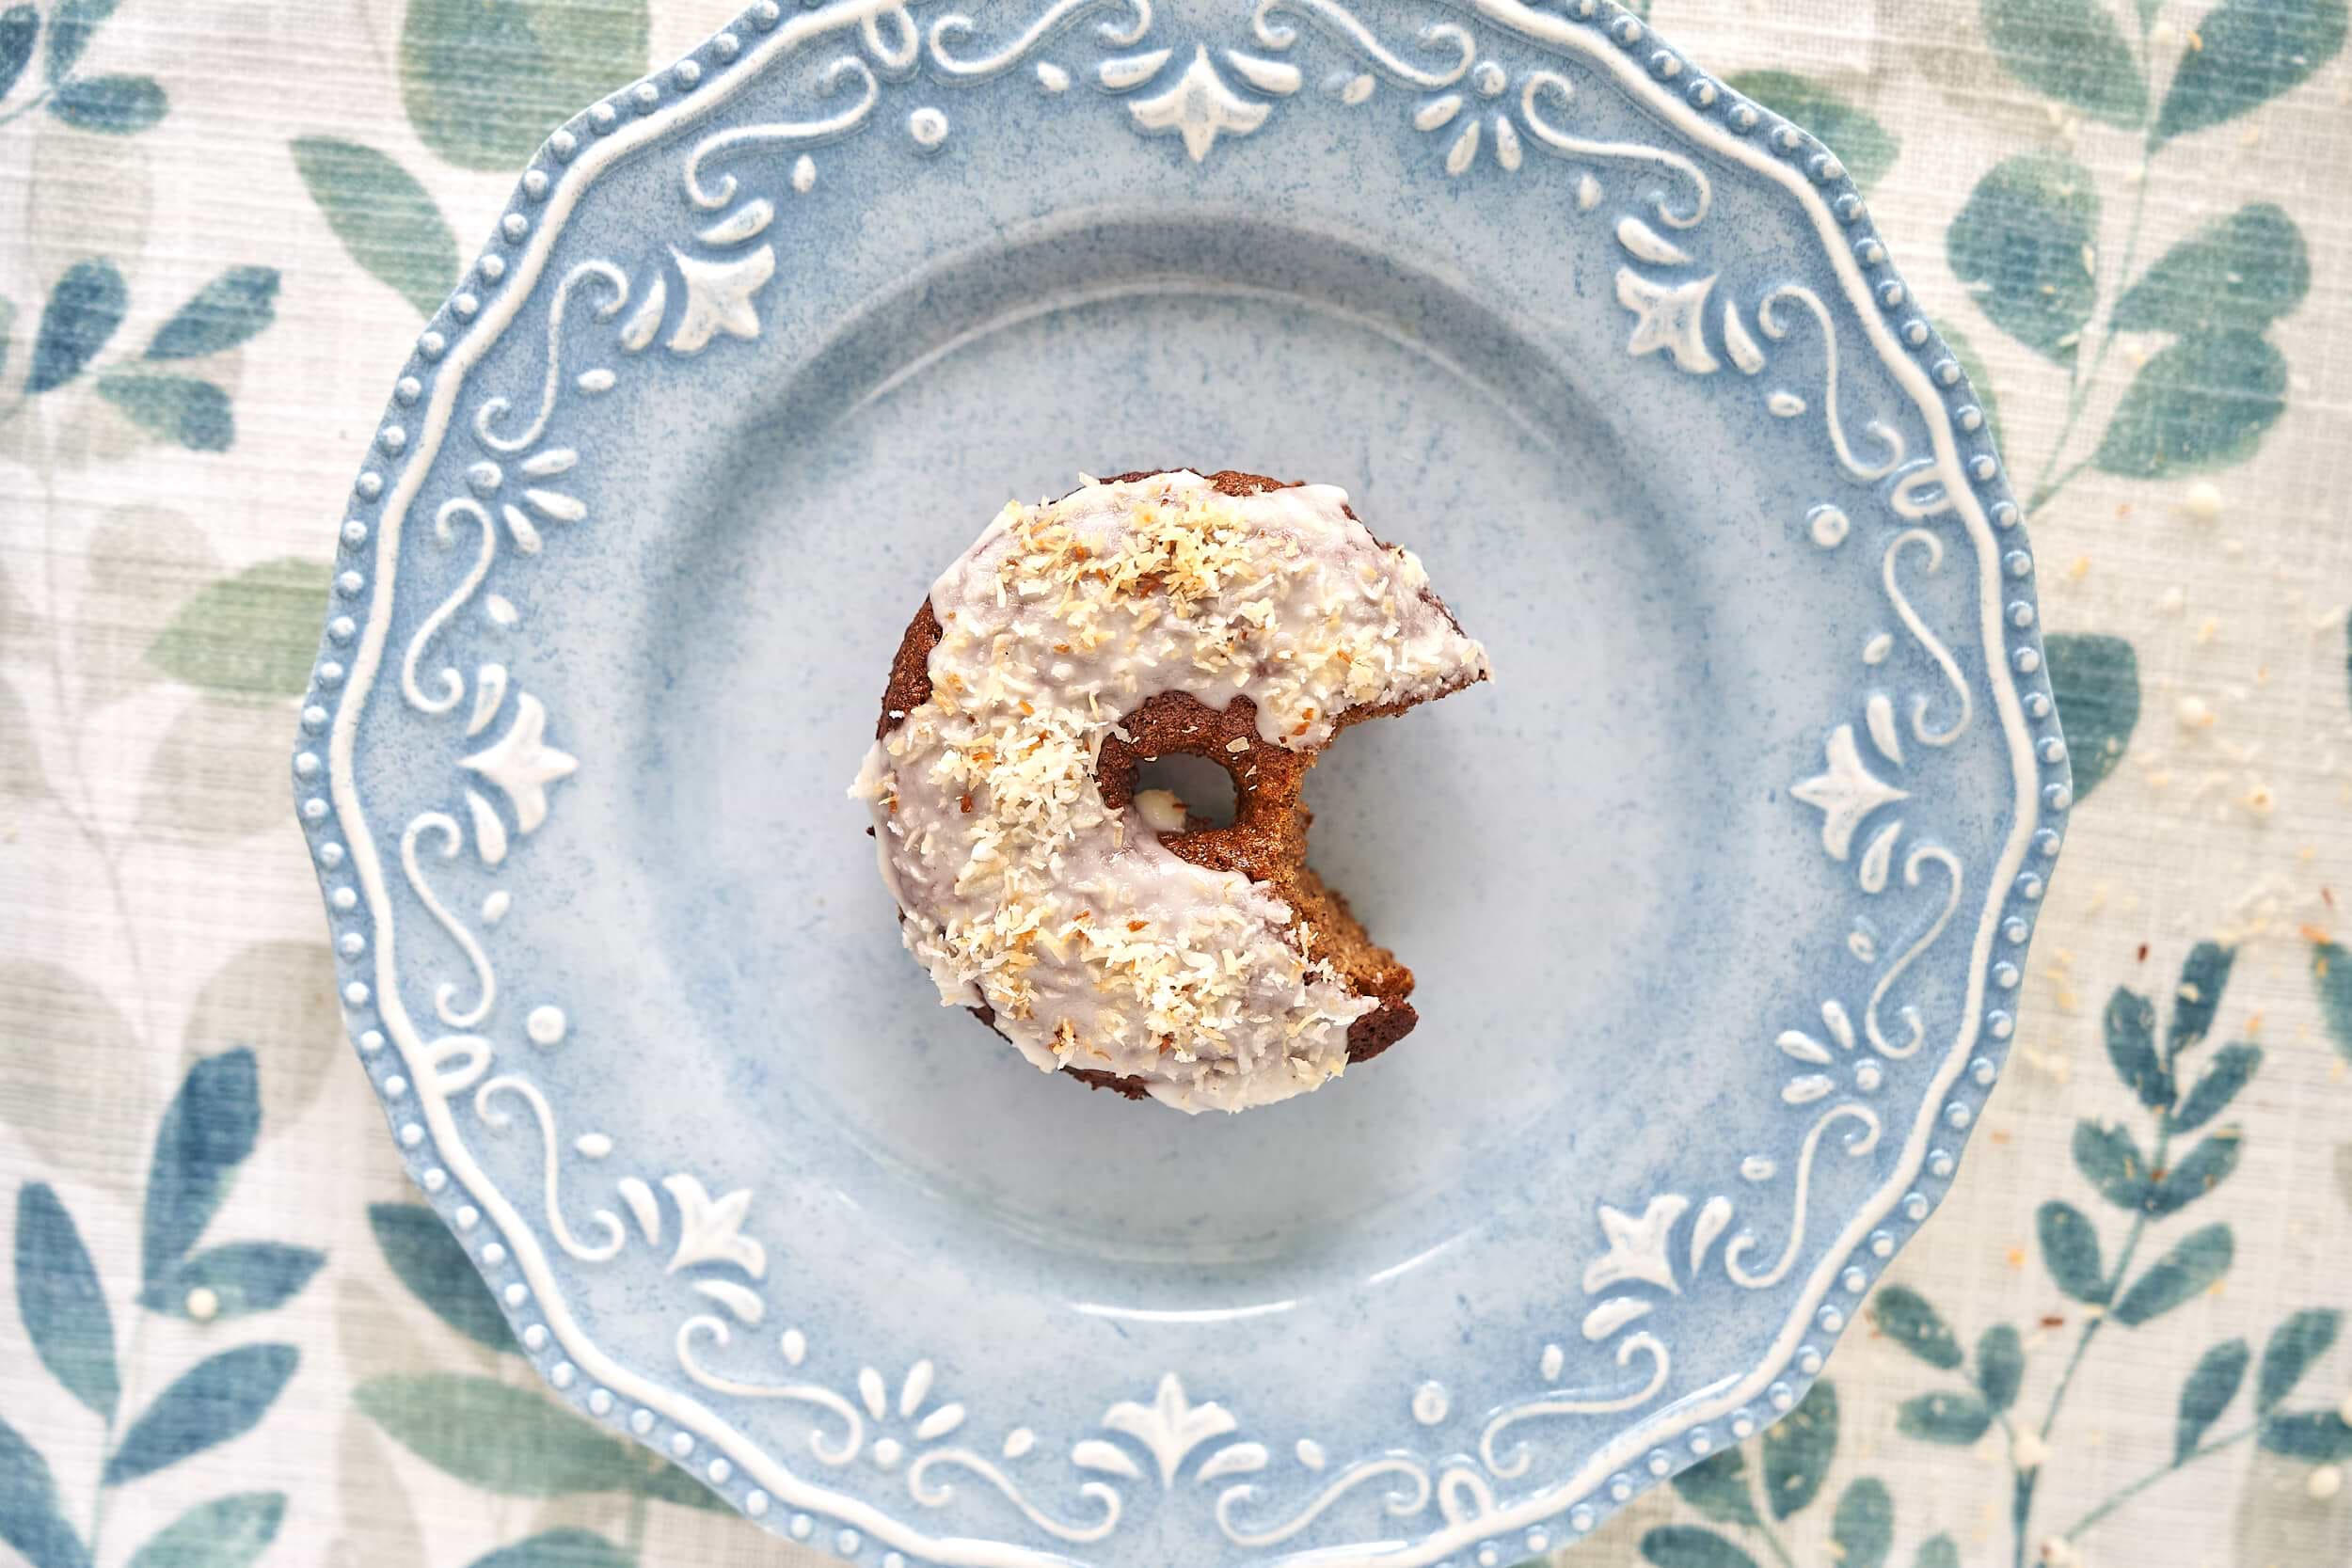 Gluten-free donut on a blue plate.